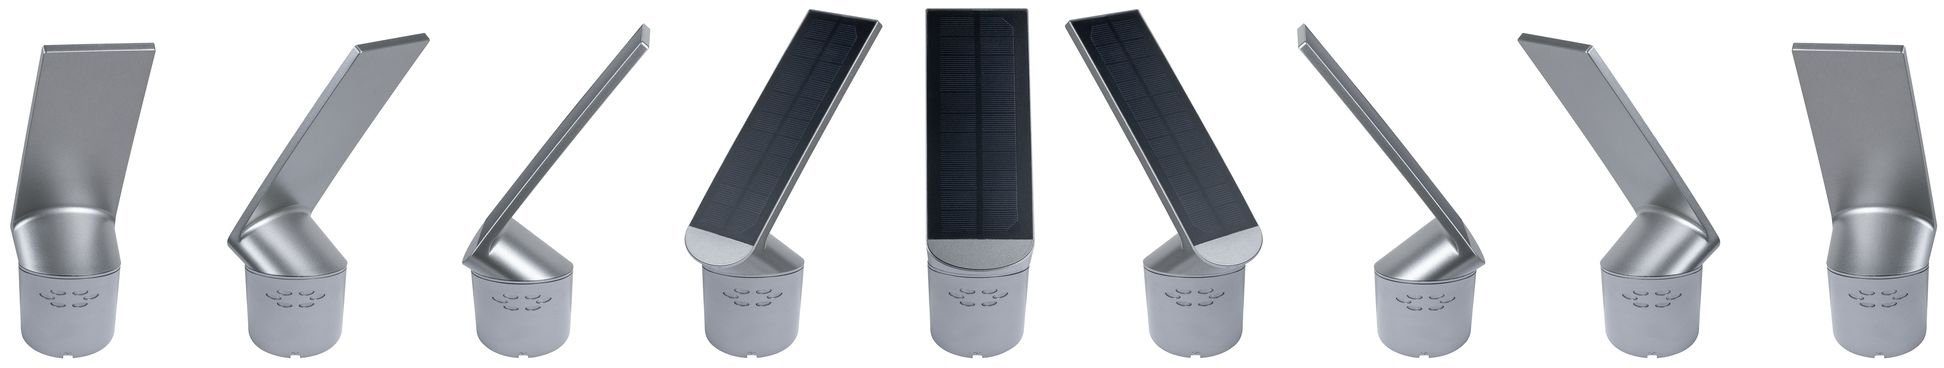 fest Outdoor LED Ilias, integriert, LED-Board, Pollerleuchte Bewegungsmelder, Warmweiß, LED Bewegungsmelder mit Solar, Paulmann